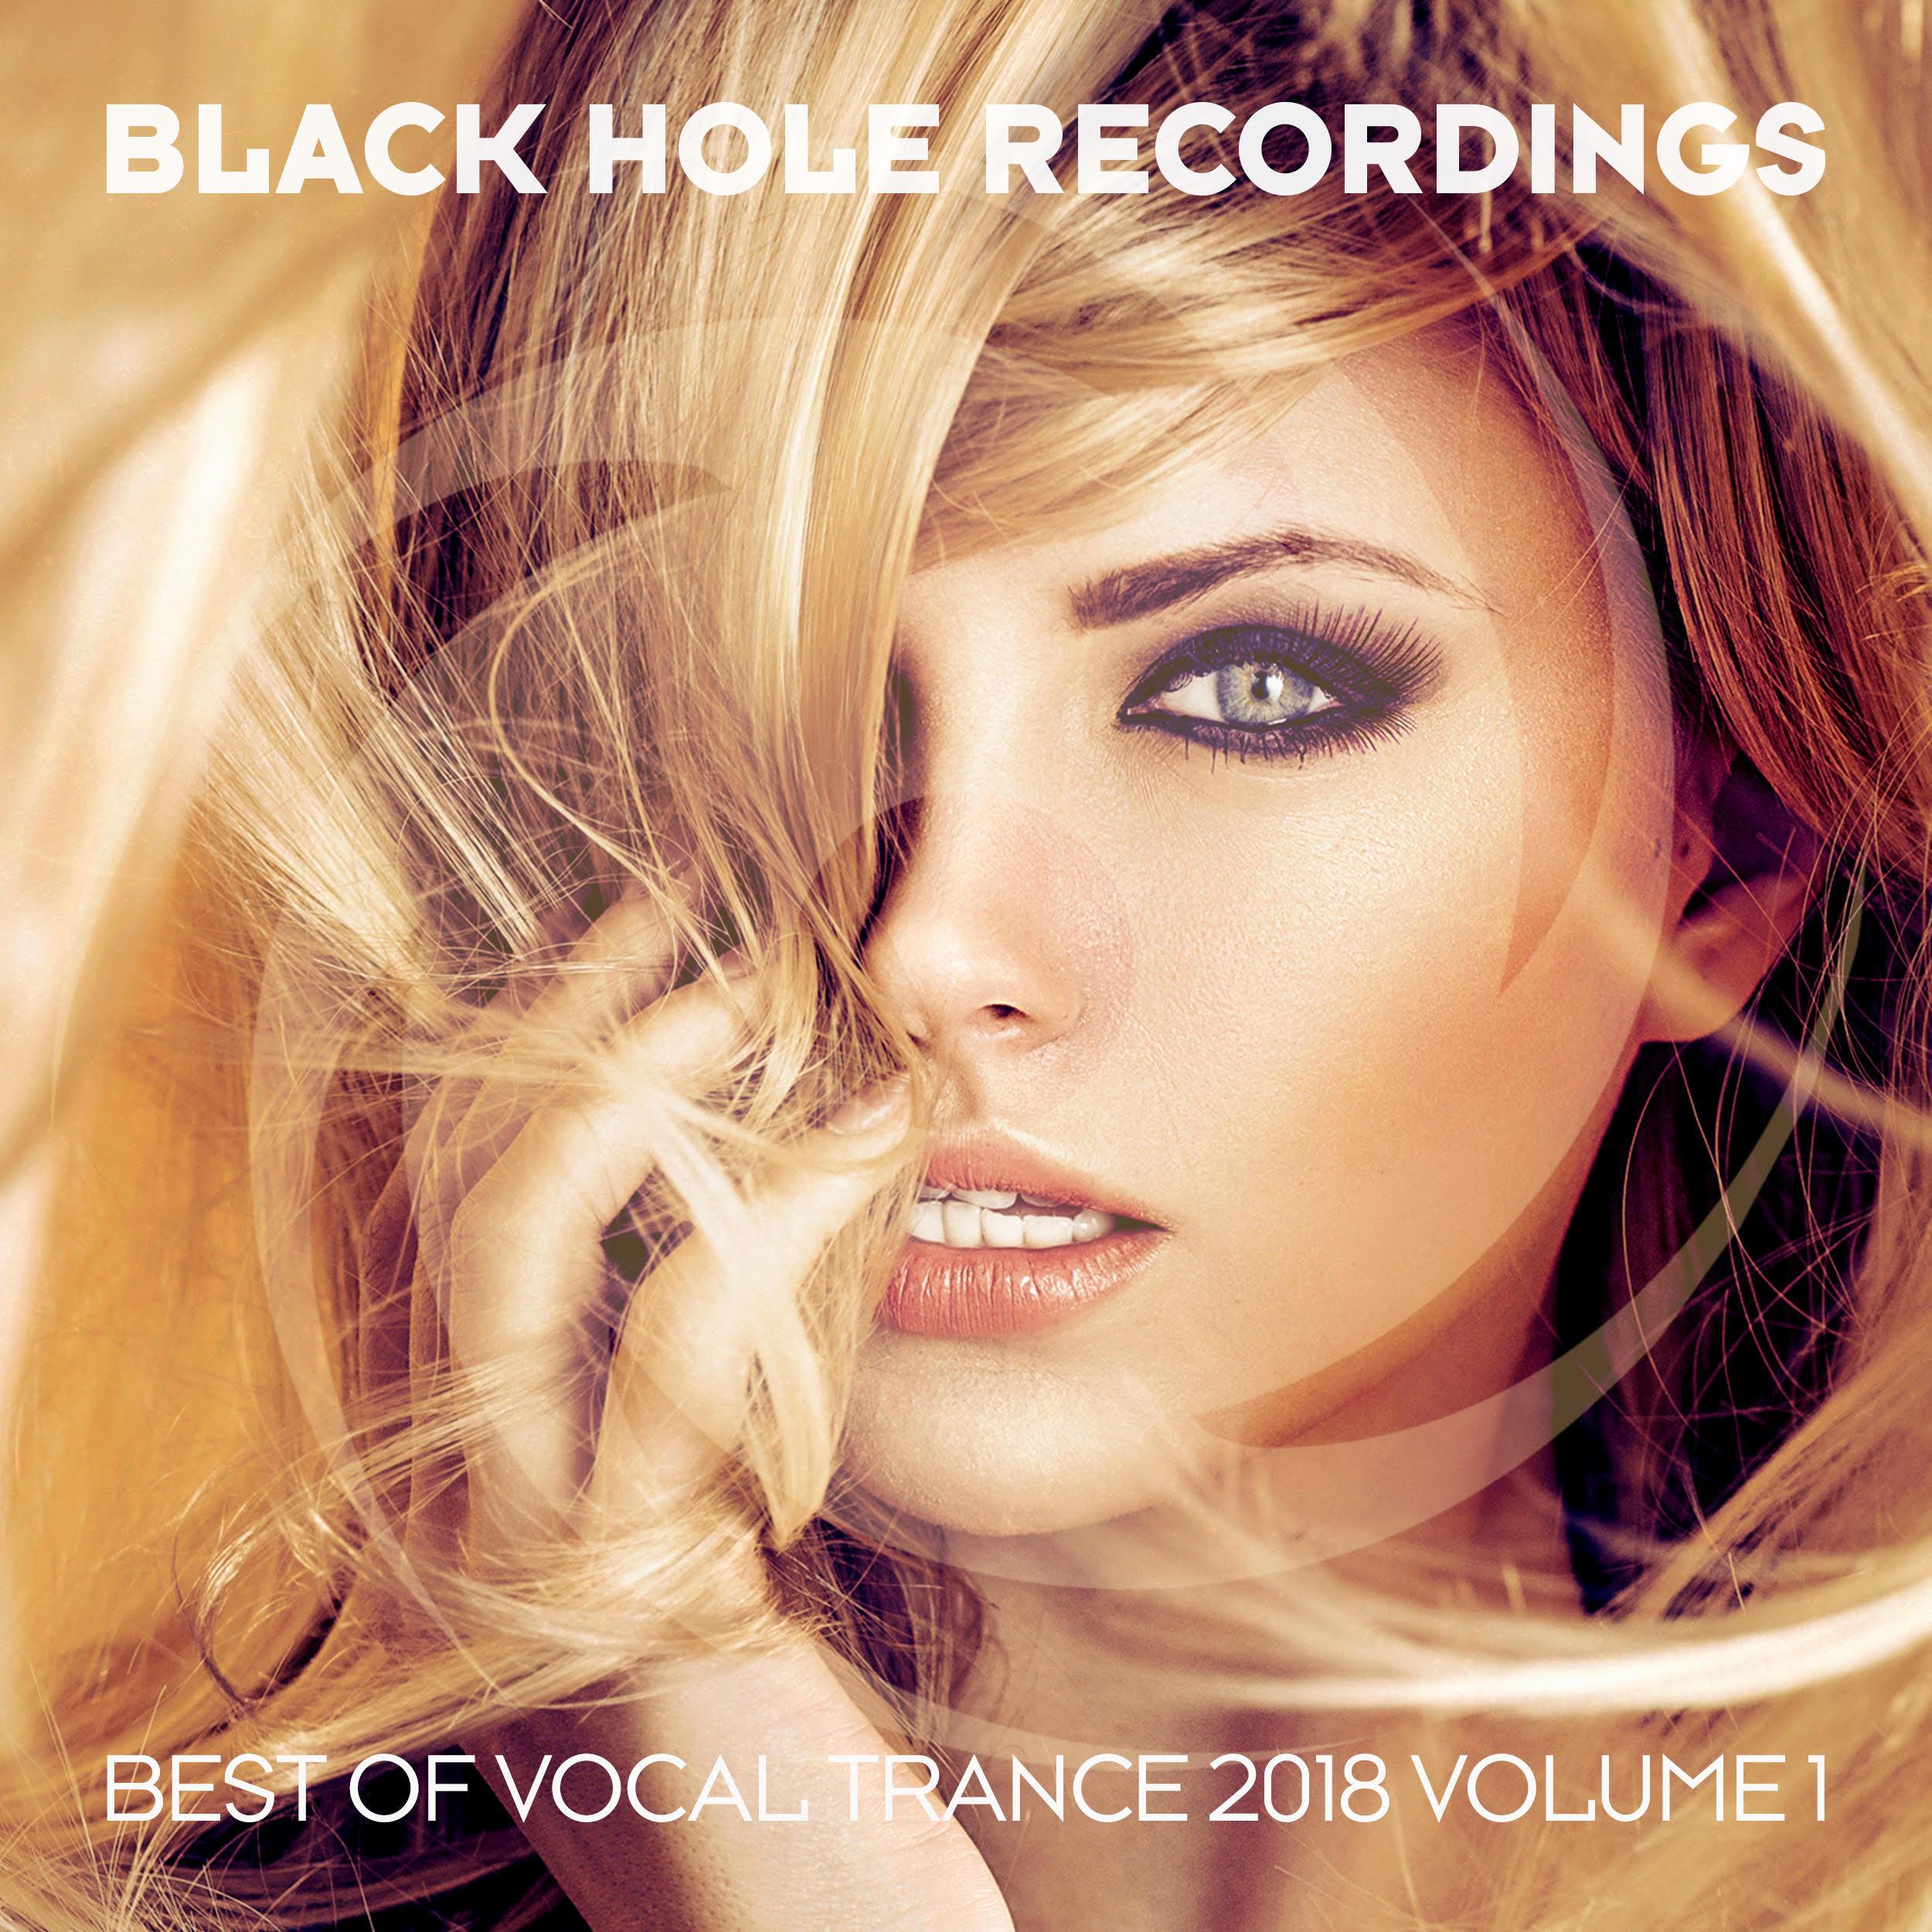 Black Hole presents Best Of Vocal Trance 2018 Volume 1